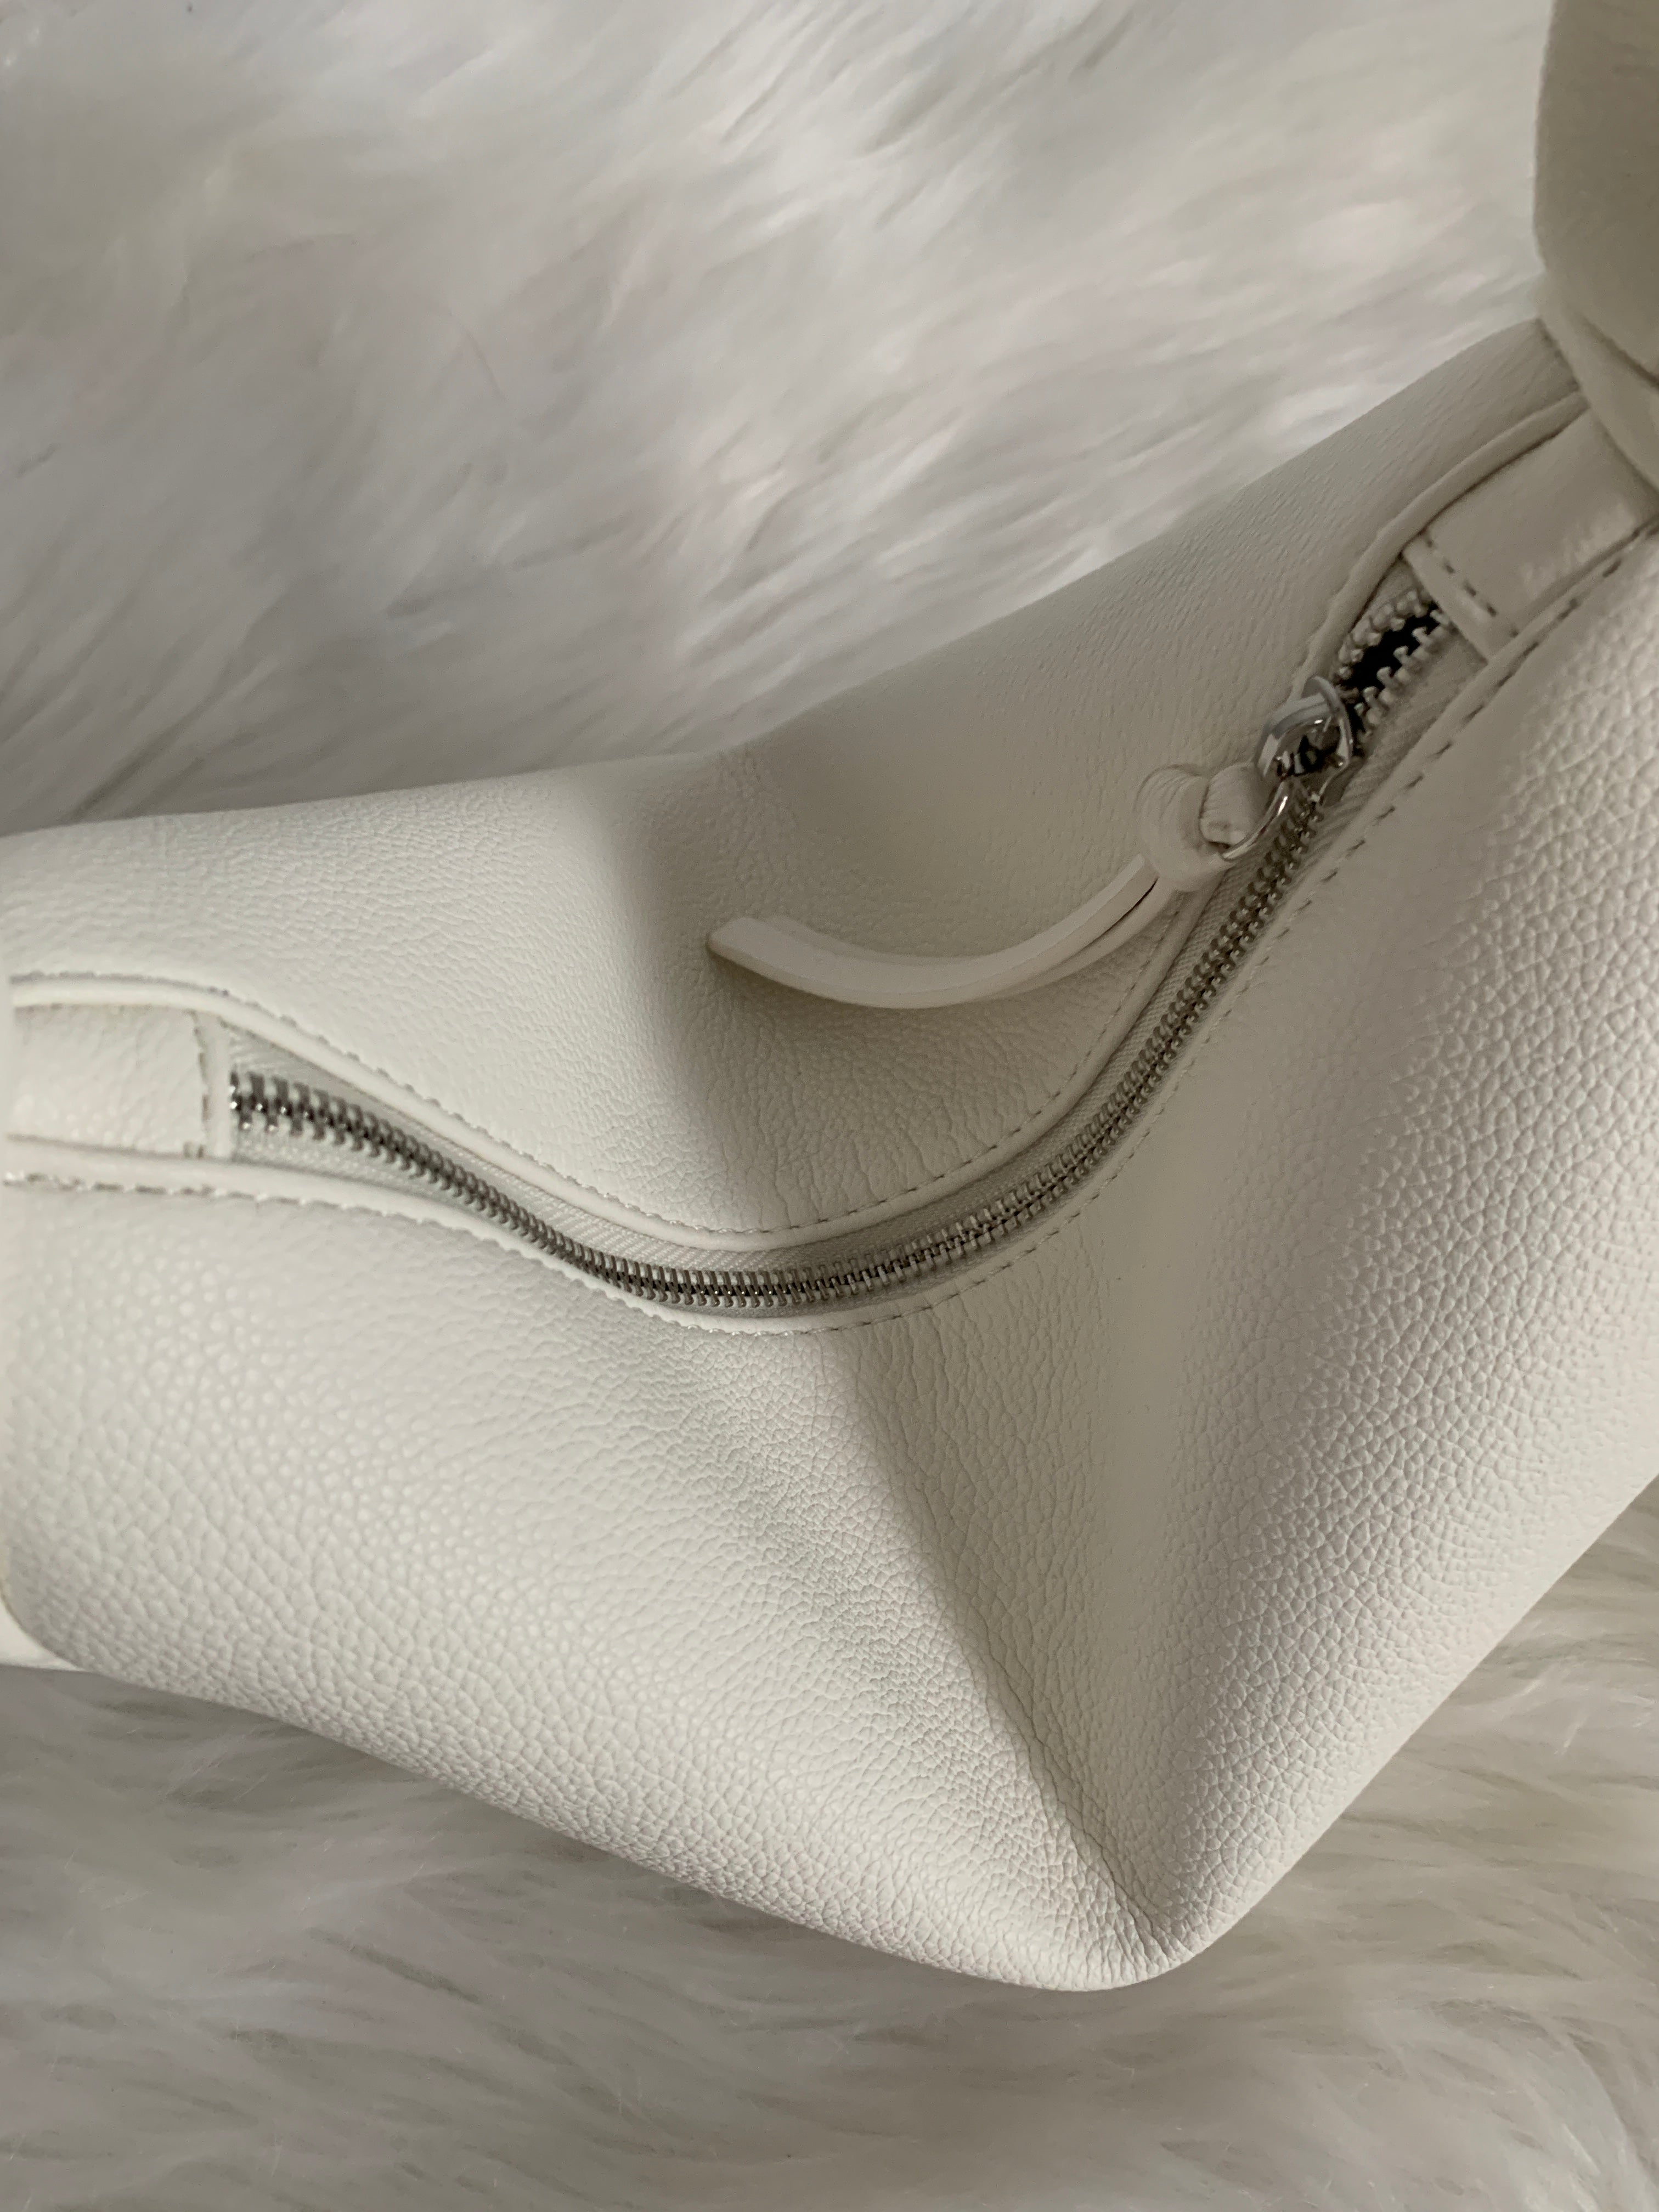 [Korean Style] Black White Minimalistic Soft Top Handle Mini Hobo Bag